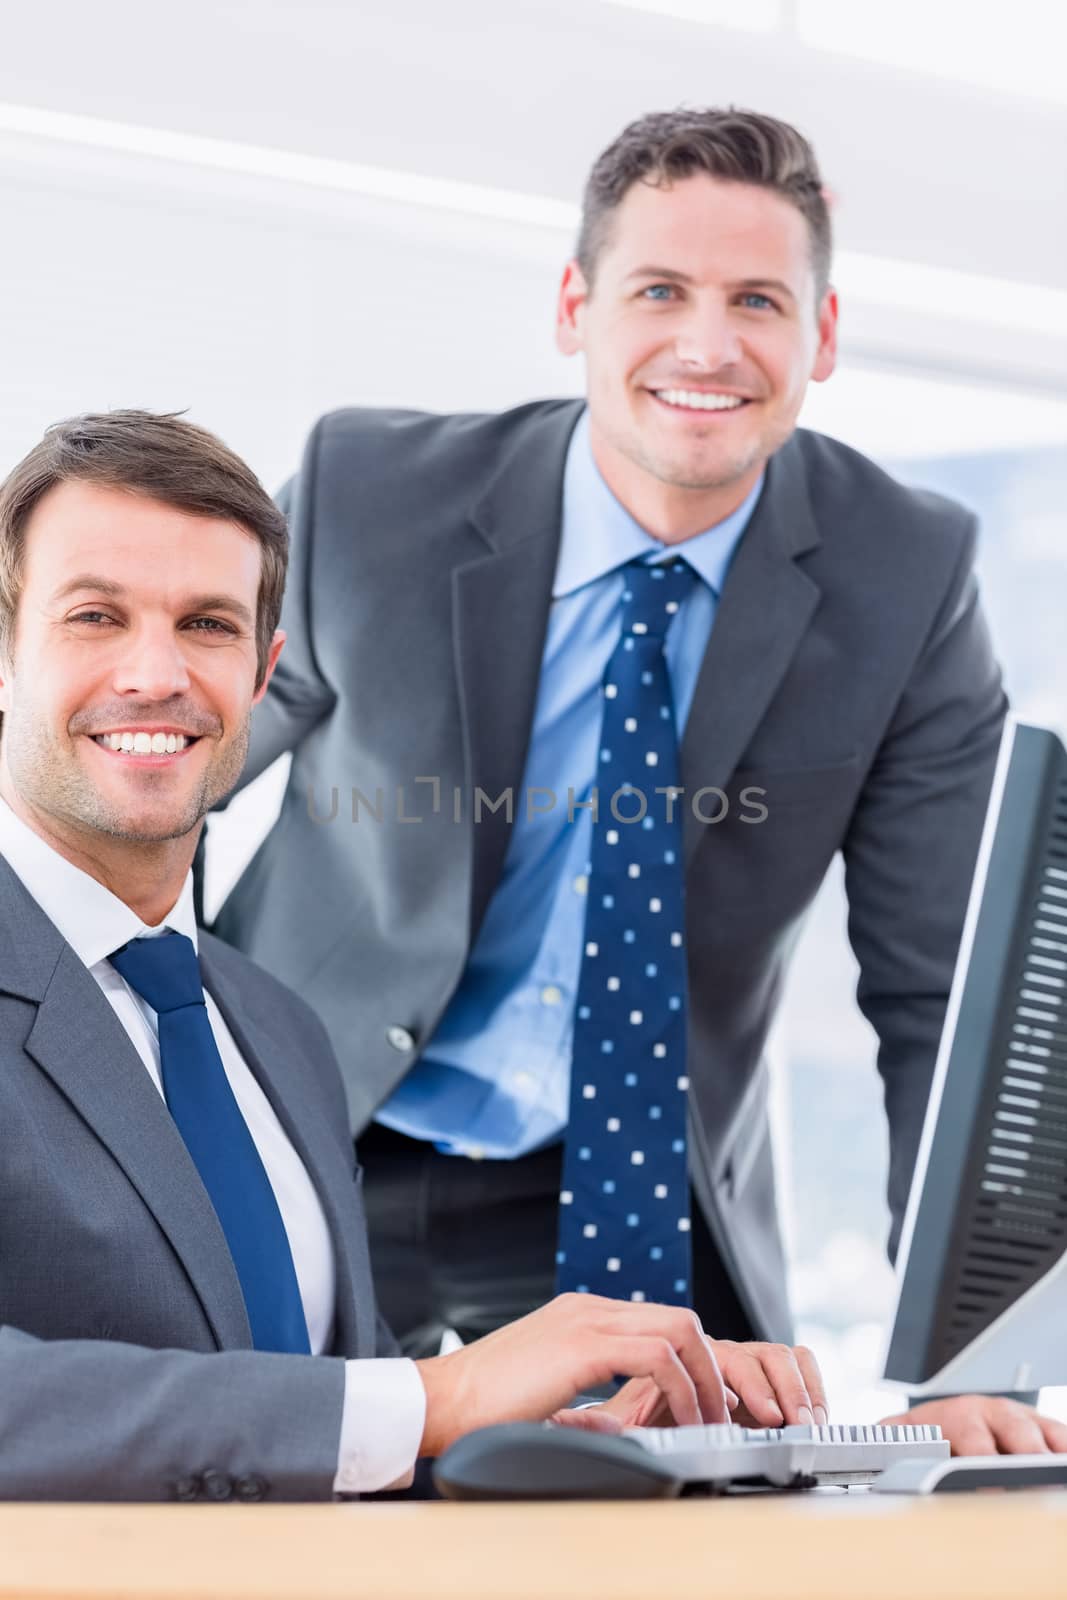 Businessmen using computer at office desk by Wavebreakmedia